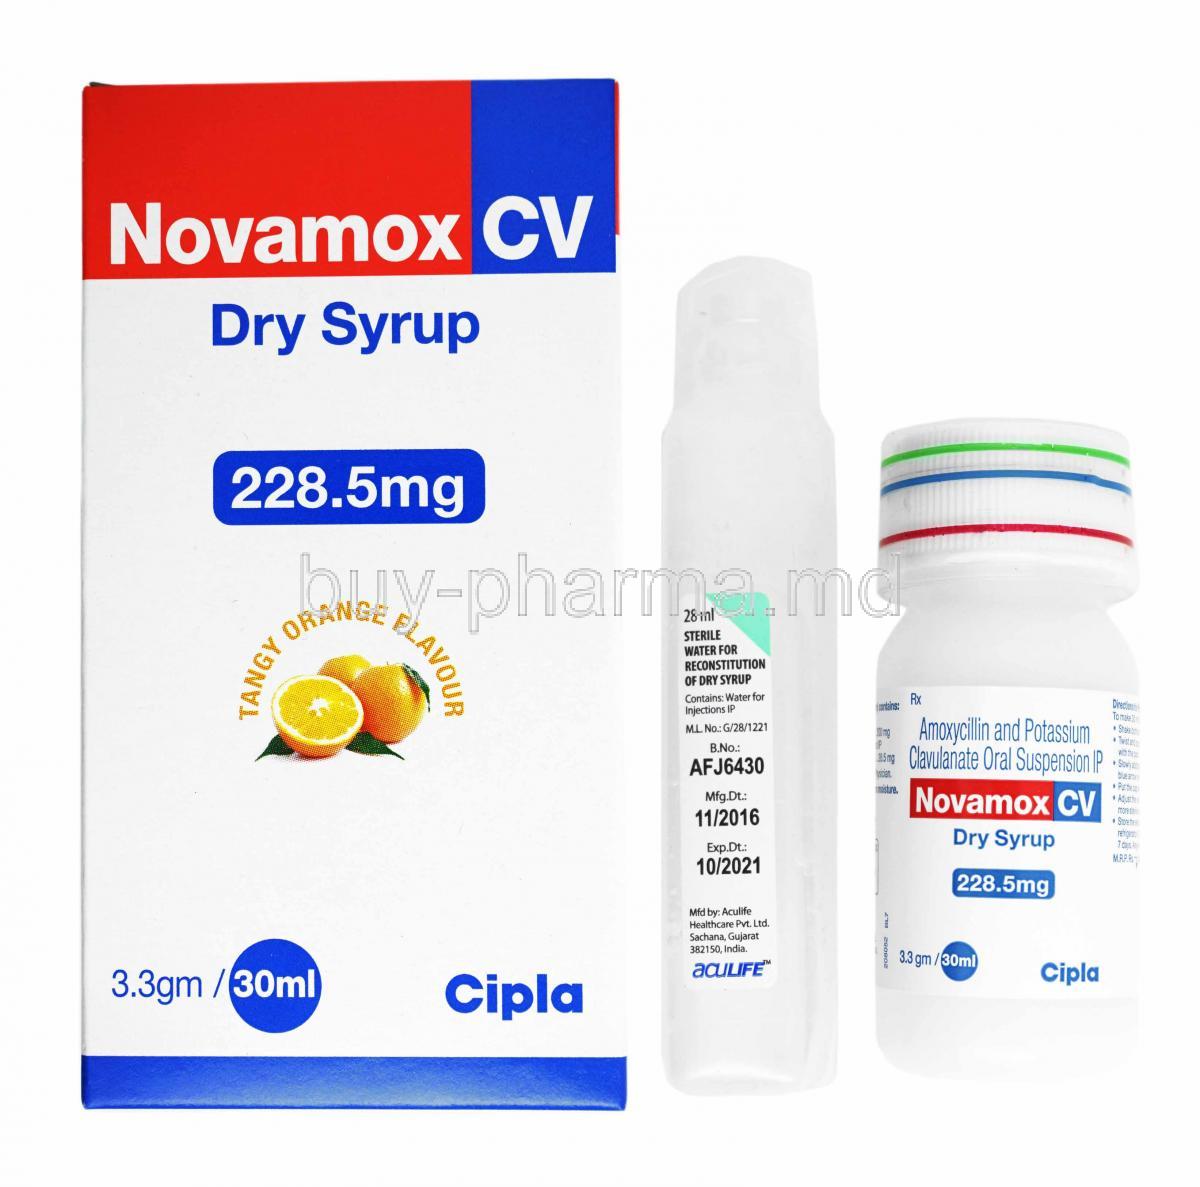 Novamox CV Dry Syrup, Amoxycillin 200mg and Clavulanic Acid 28.5mg box and bottle